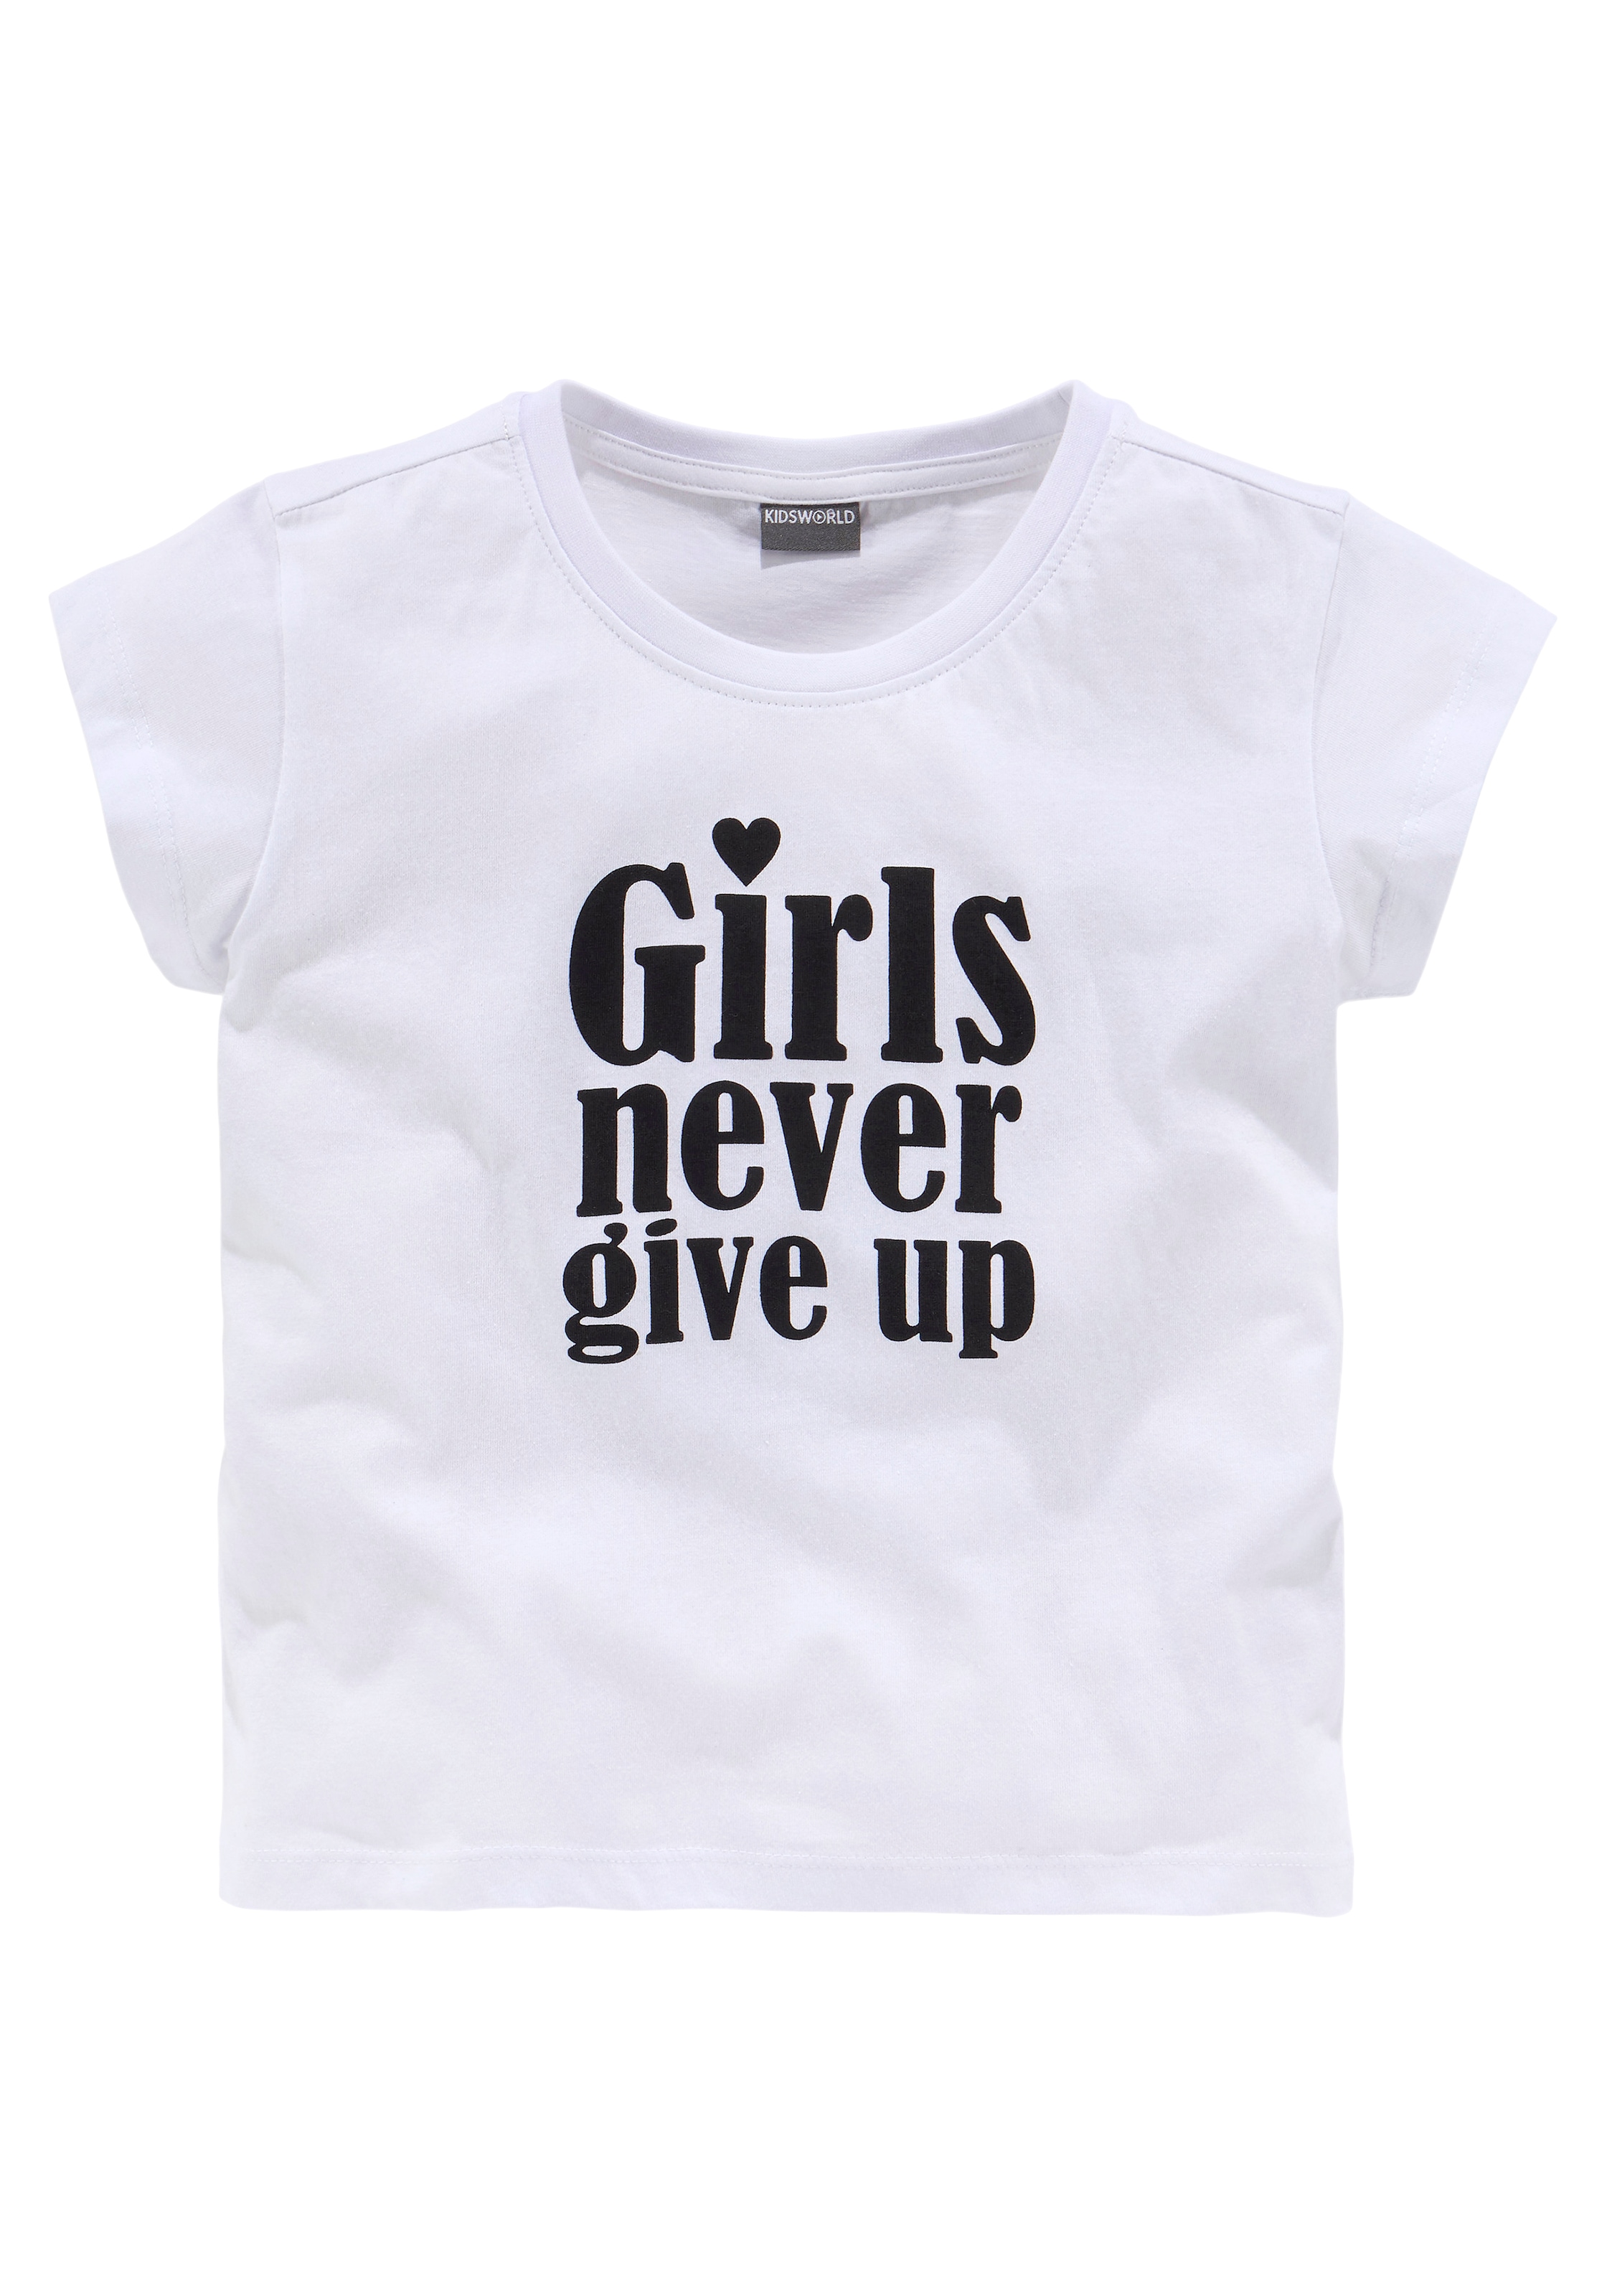 Form T-Shirt up«, give nerver modische %Sale »Girls kurze jetzt im KIDSWORLD